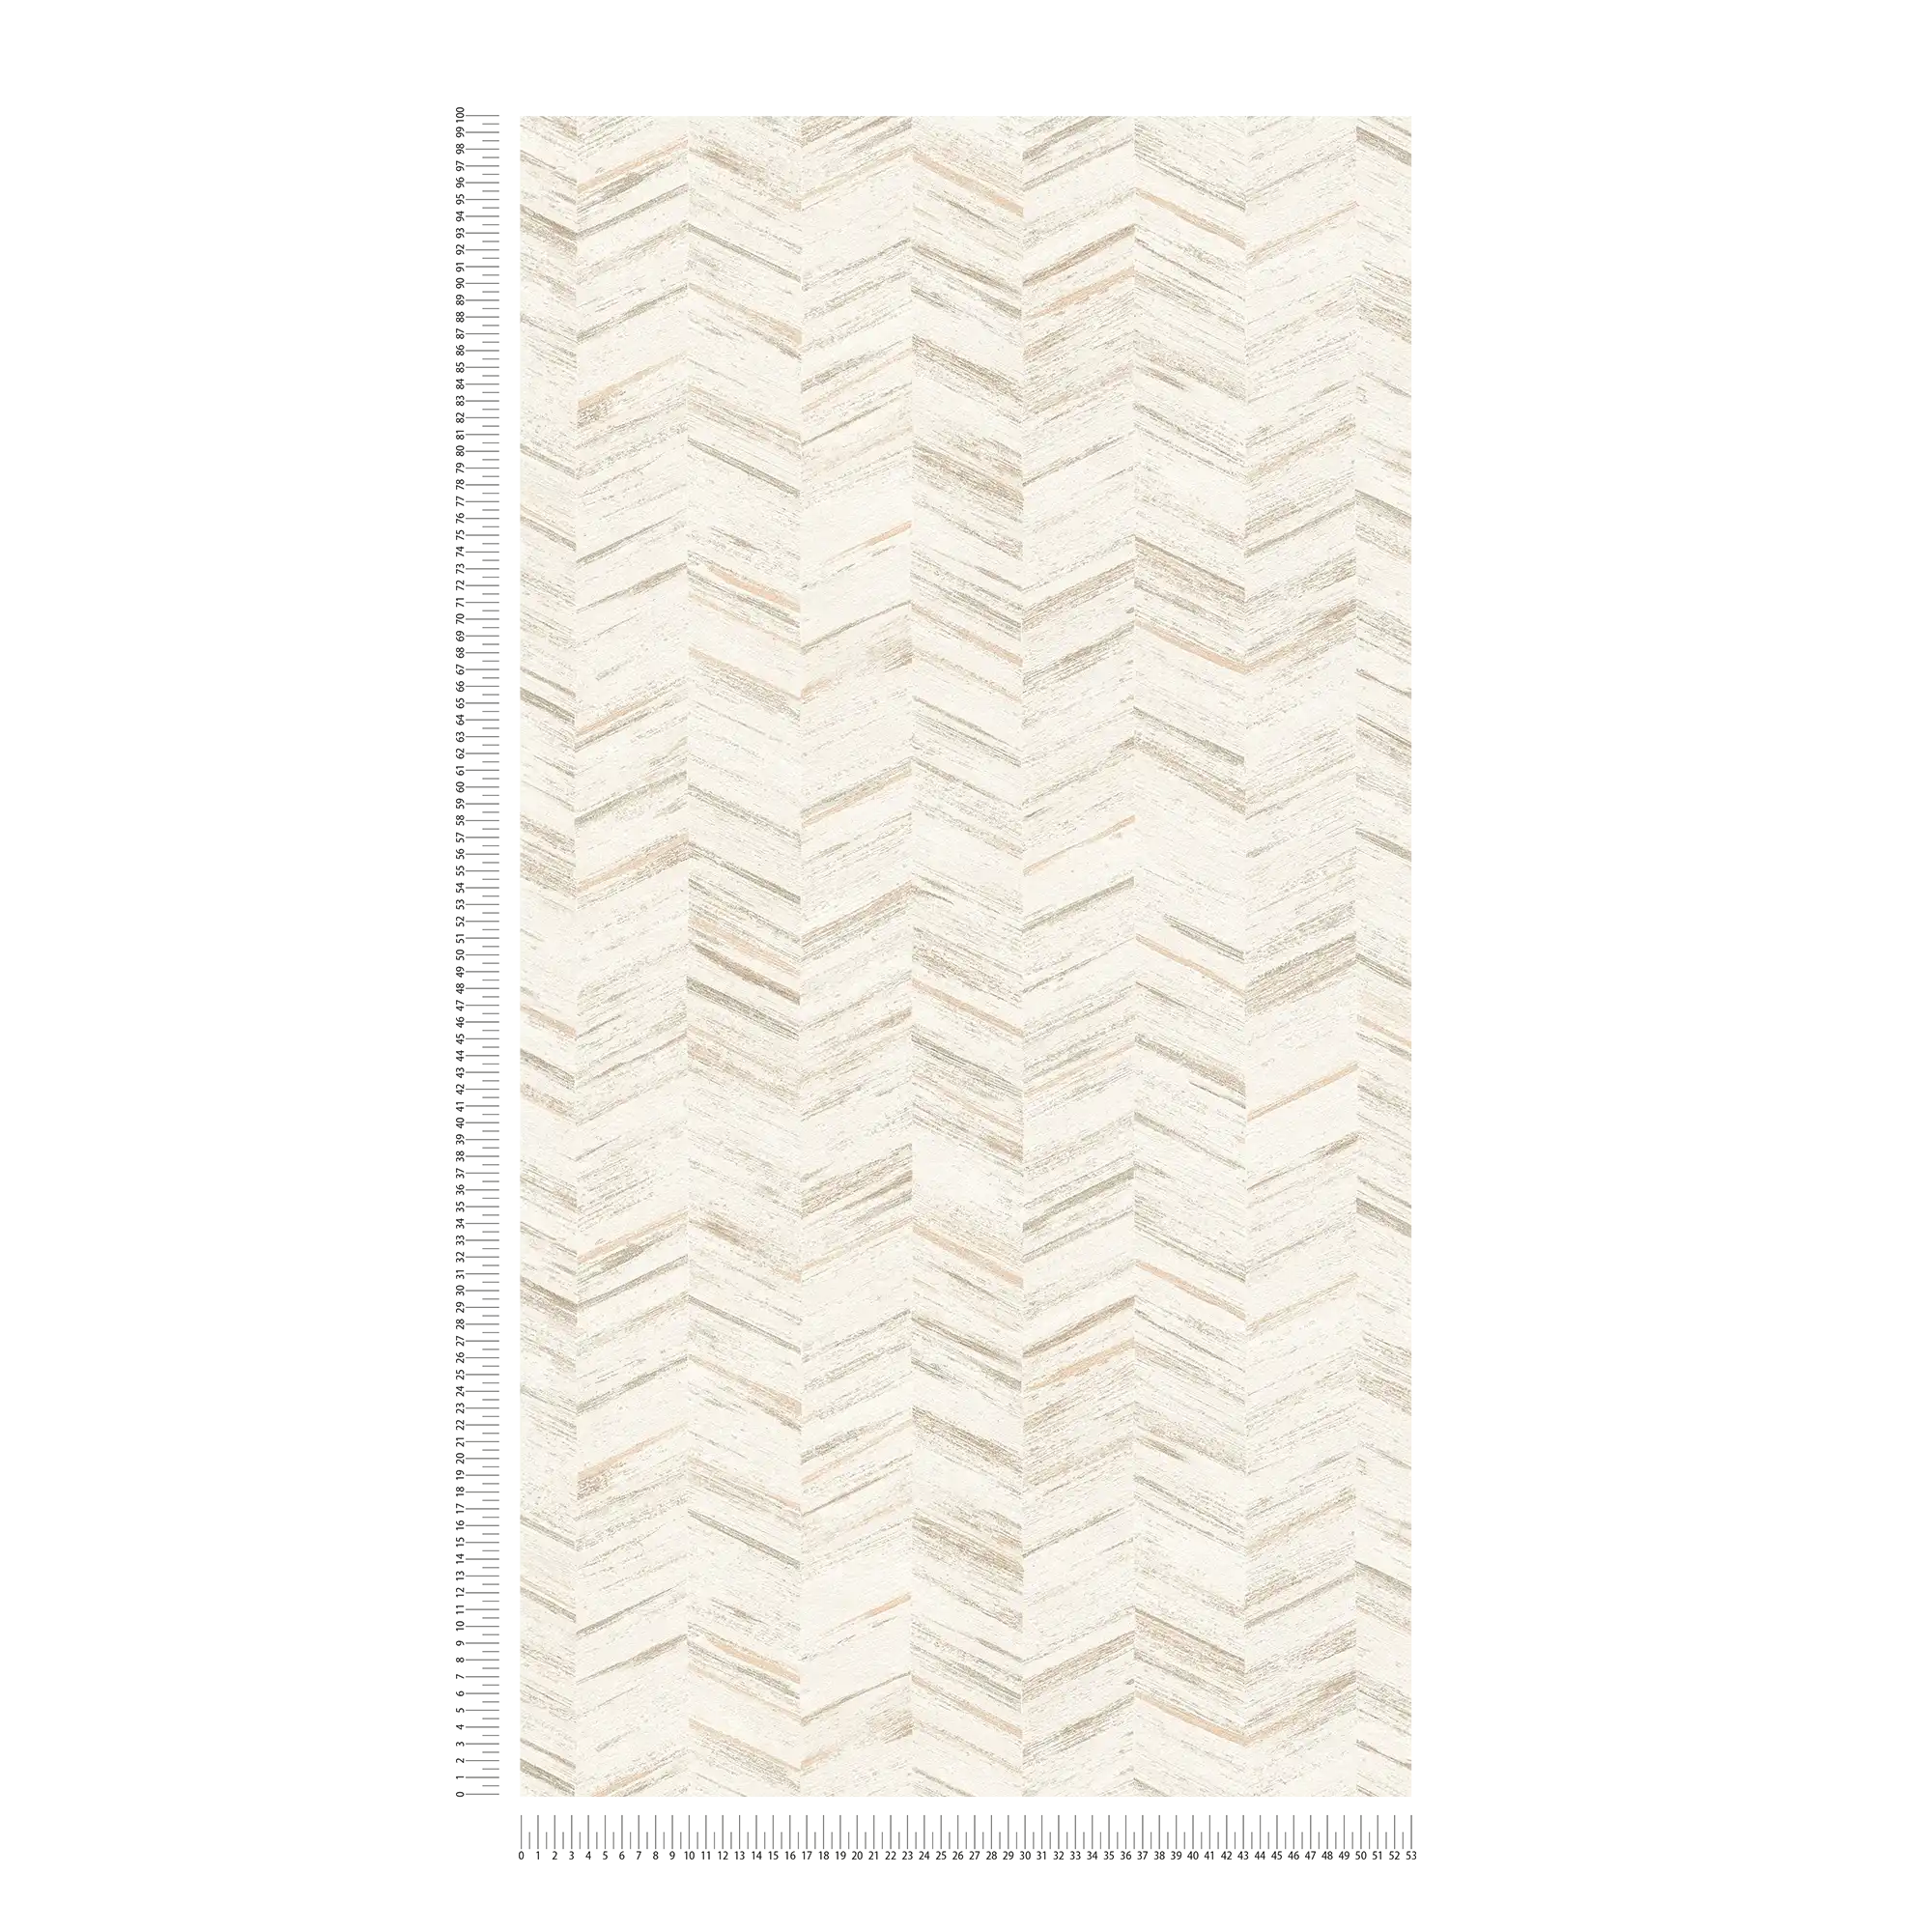             wallpaper wood look stripes with herringbone effect - white, cream
        